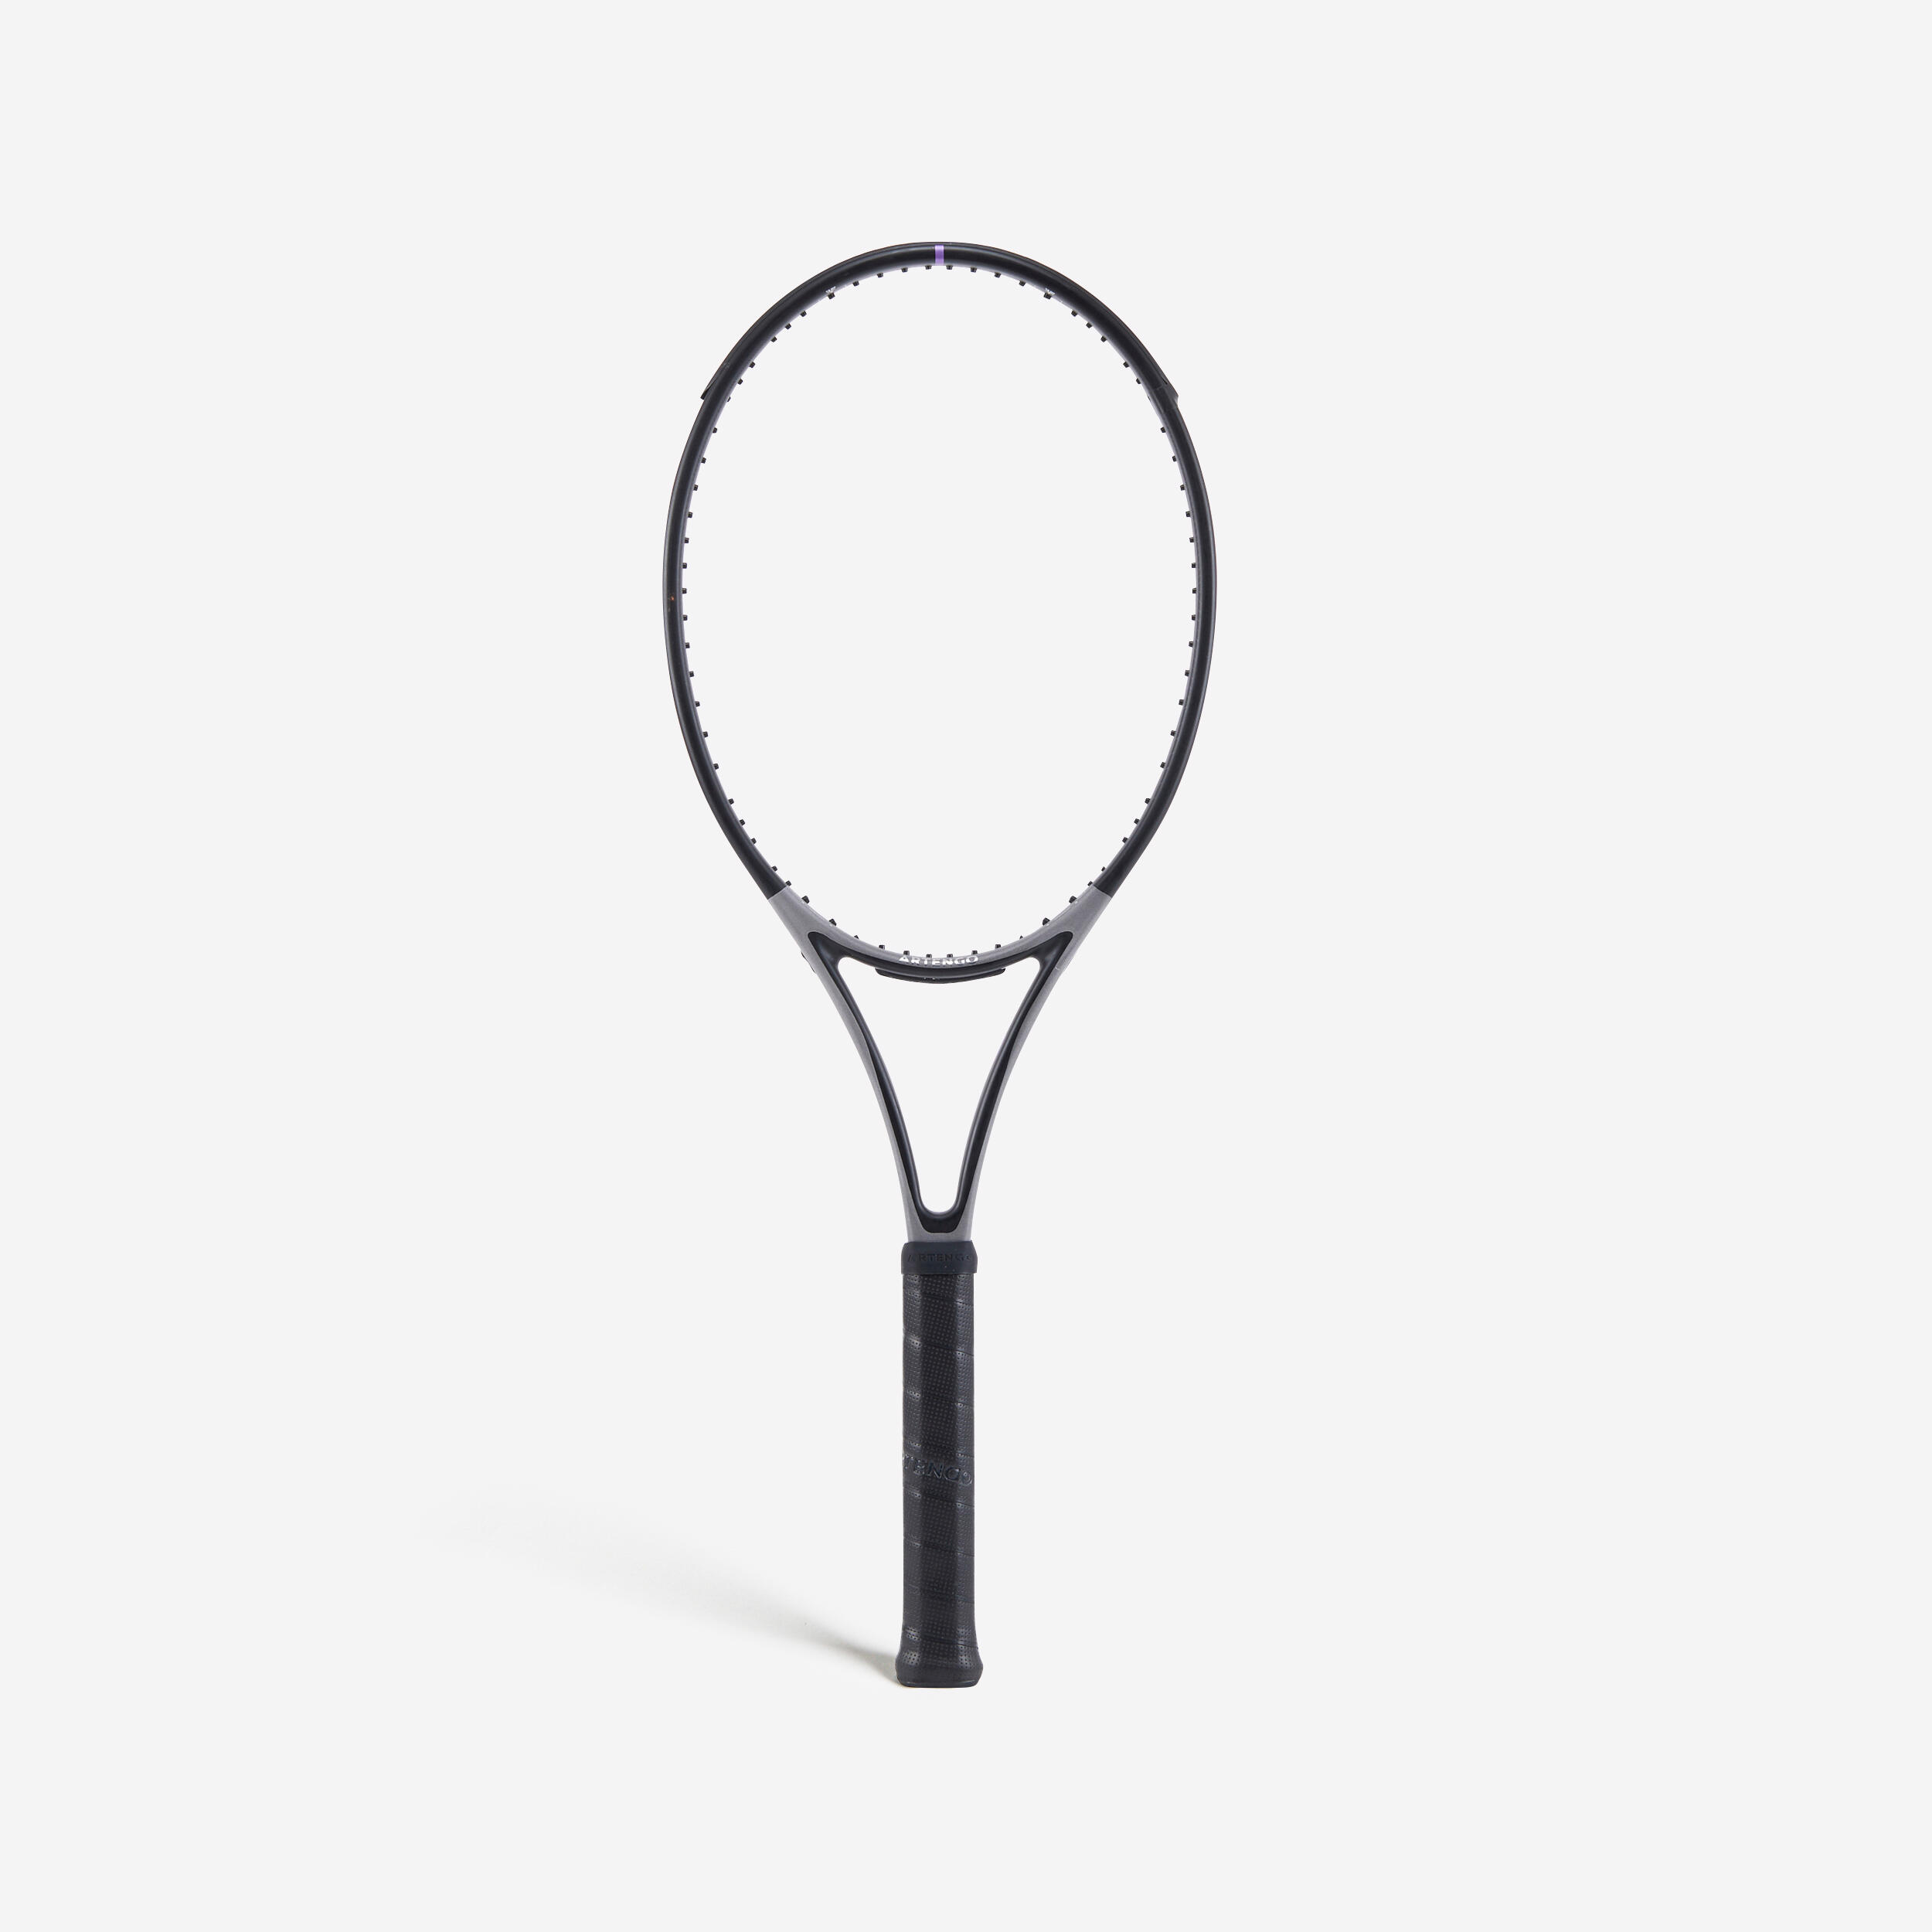 ARTENGO Adult Tennis Racket Control Tour TR960 16x19 Unstrung - Grey